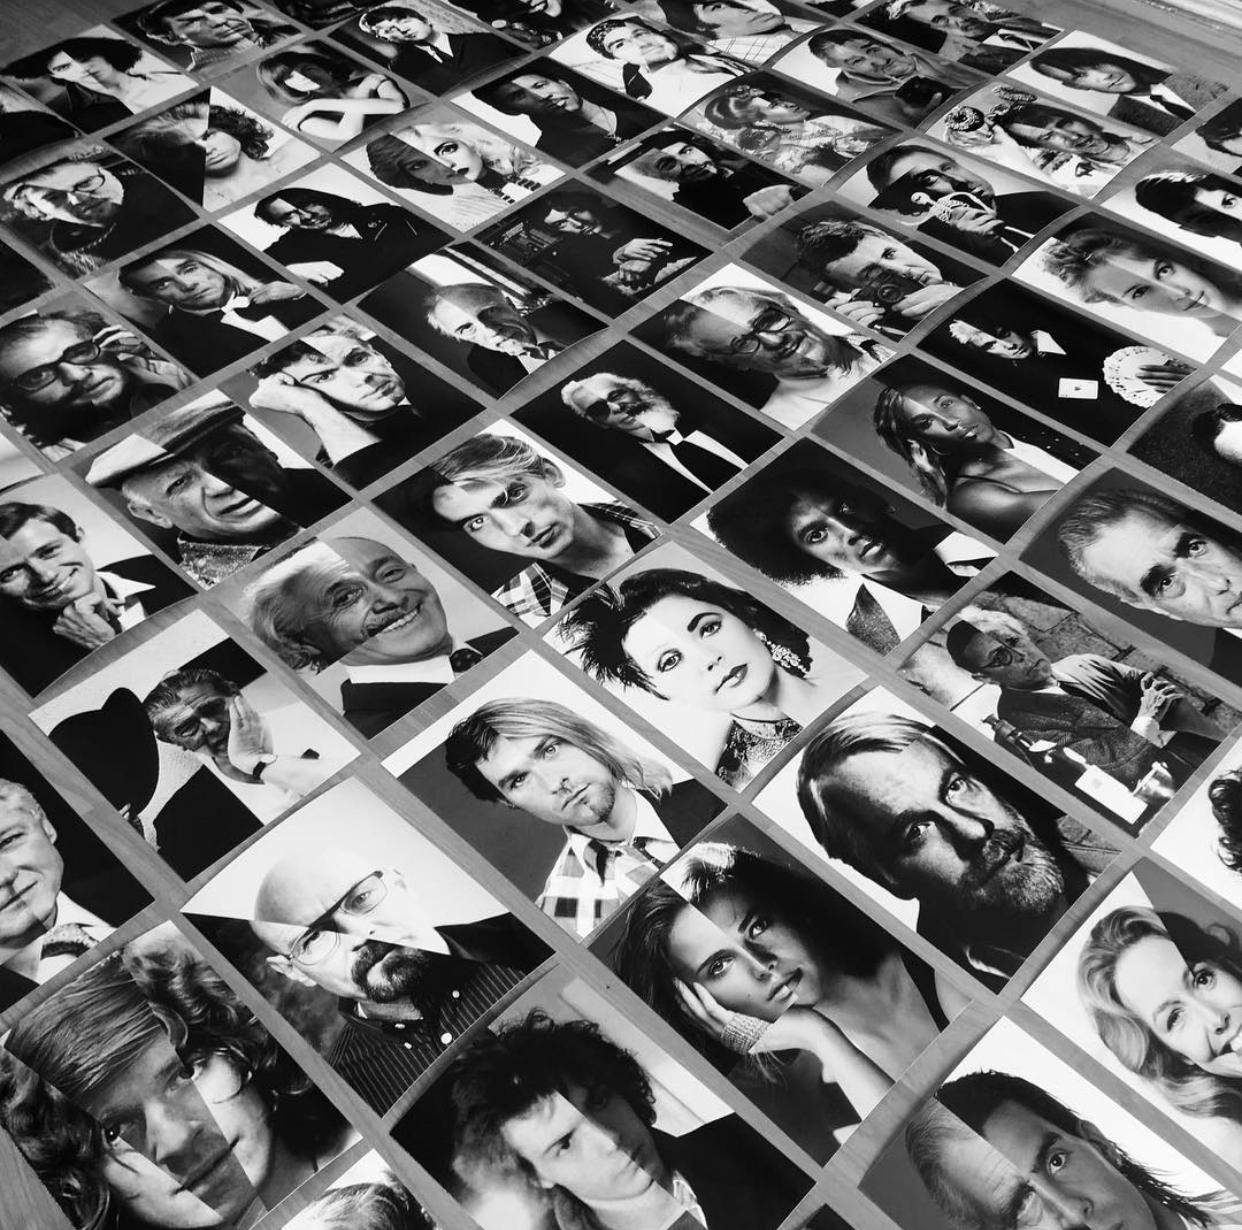 John Kennedy + John Lennon
Photography digital collage
Edition of 7
Framed in black wood